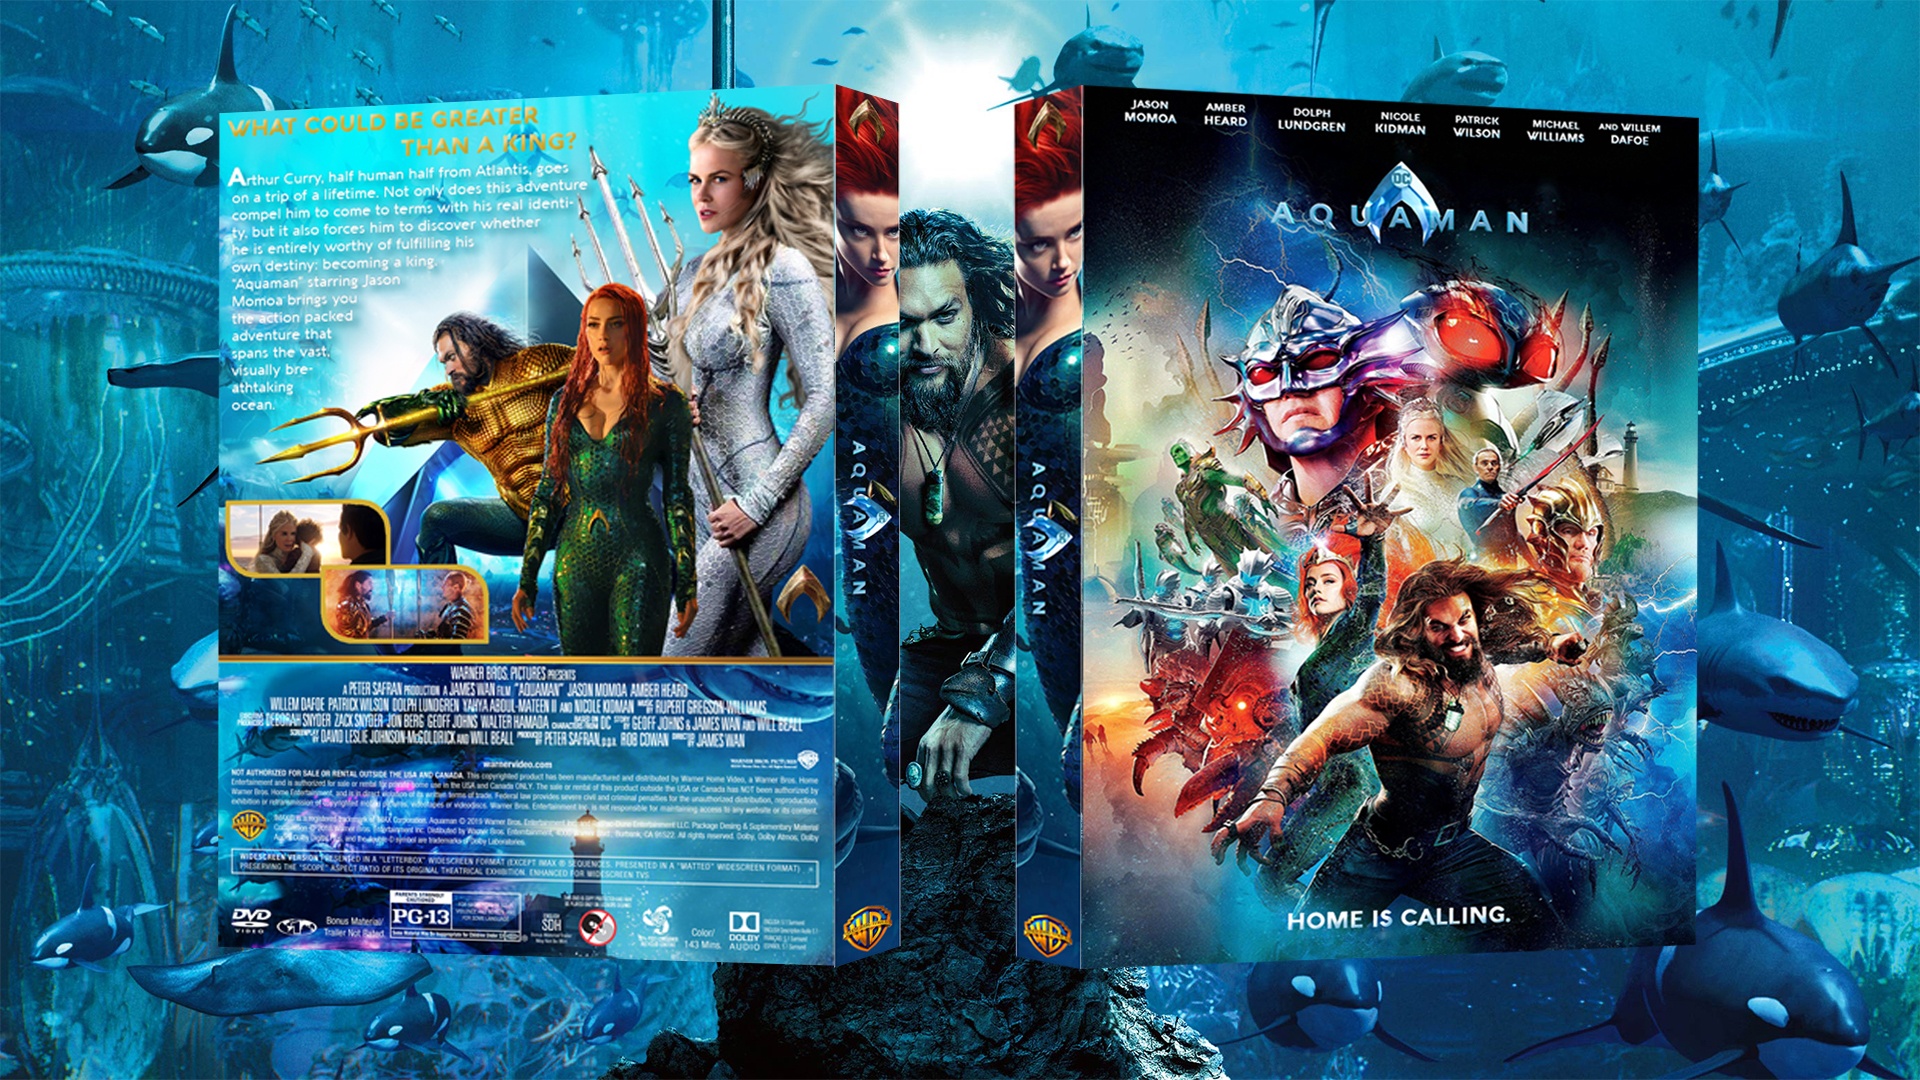 Aquaman box cover